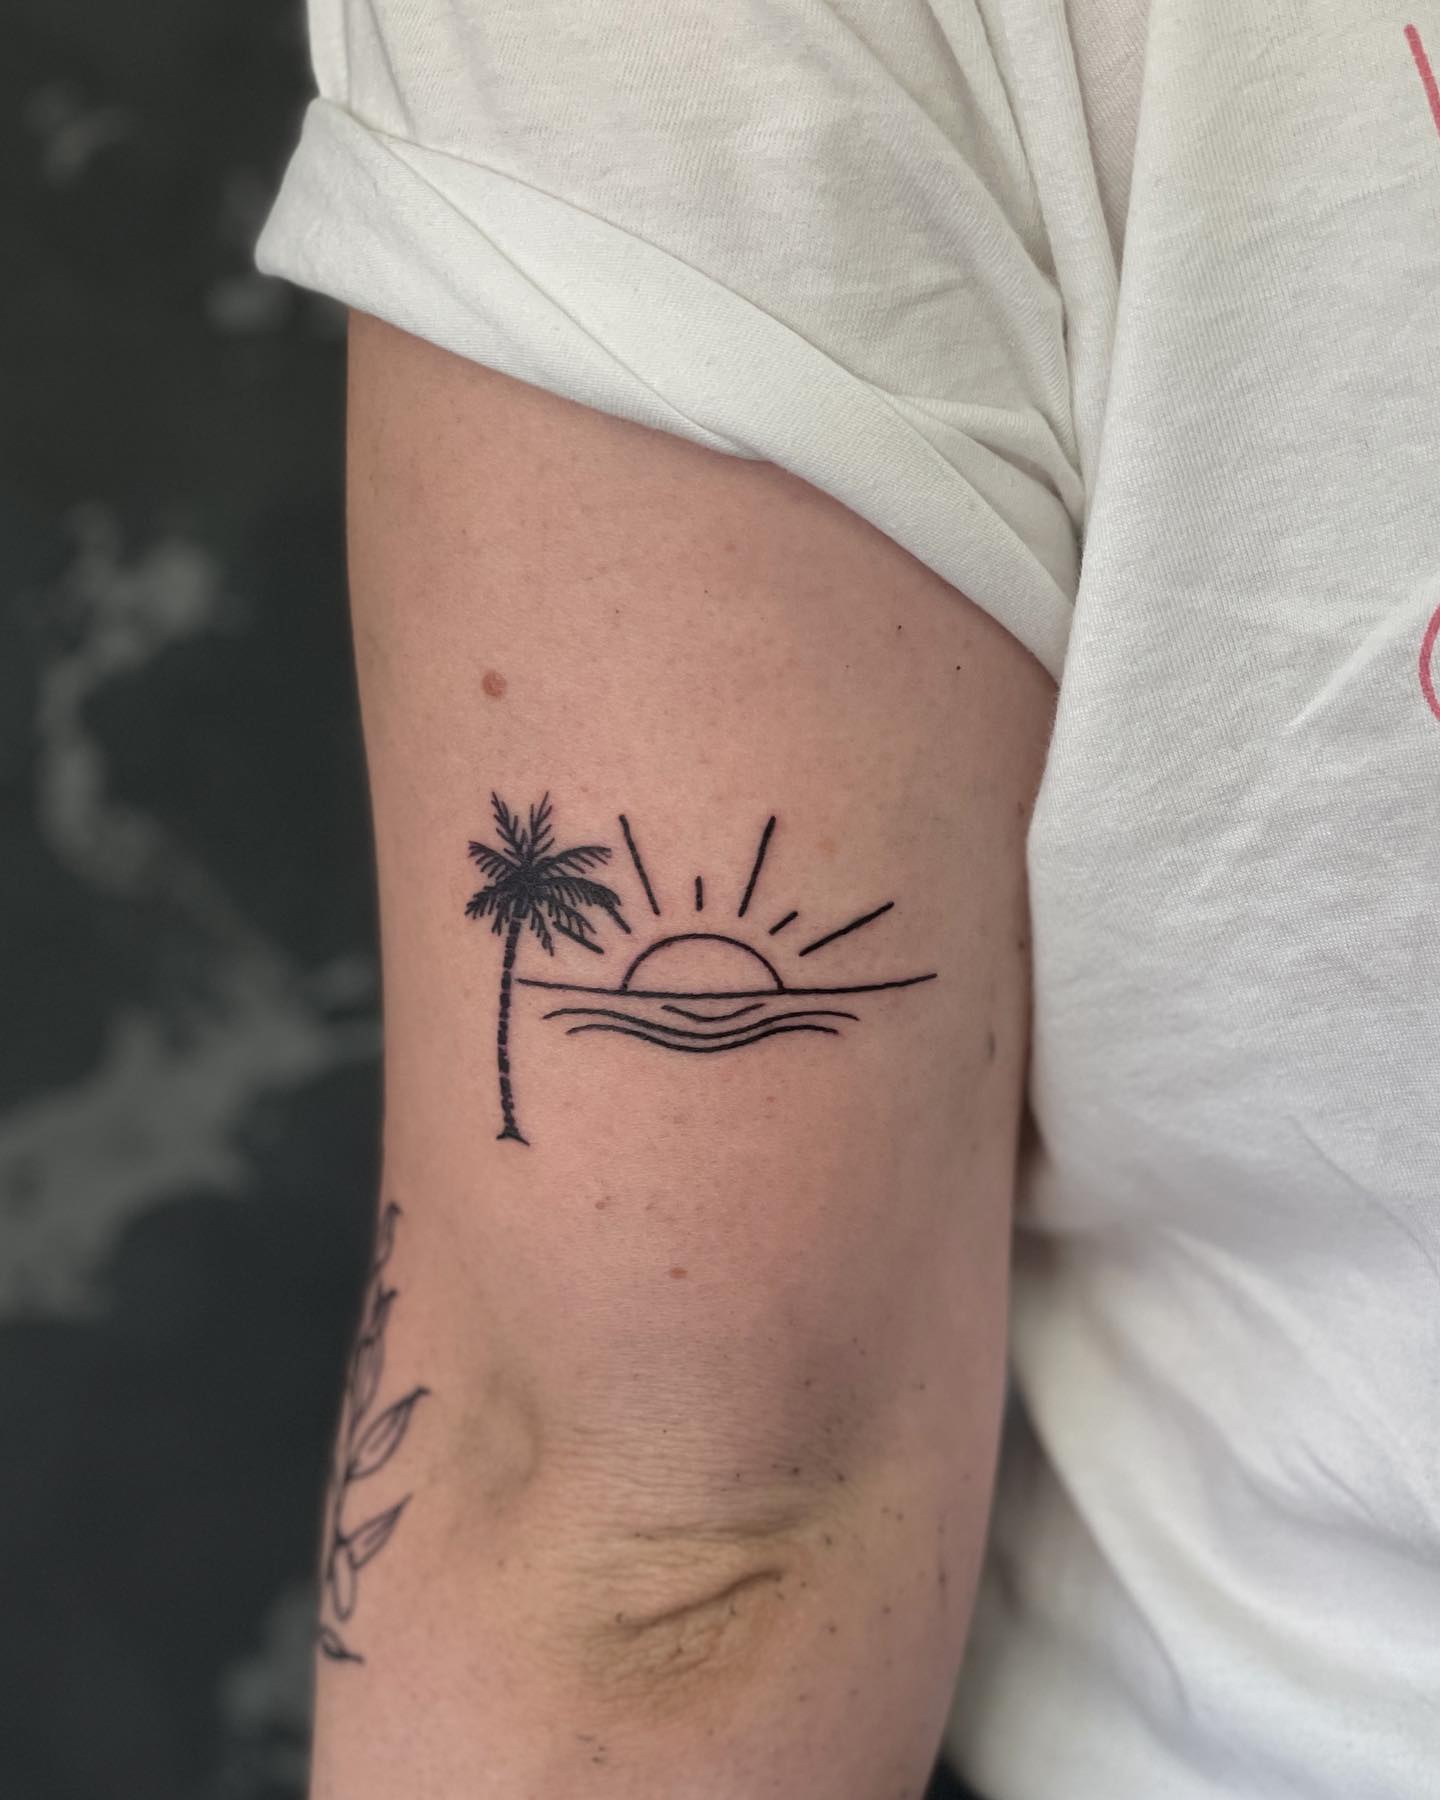 Minimalist sunset tattoo on the inner arm